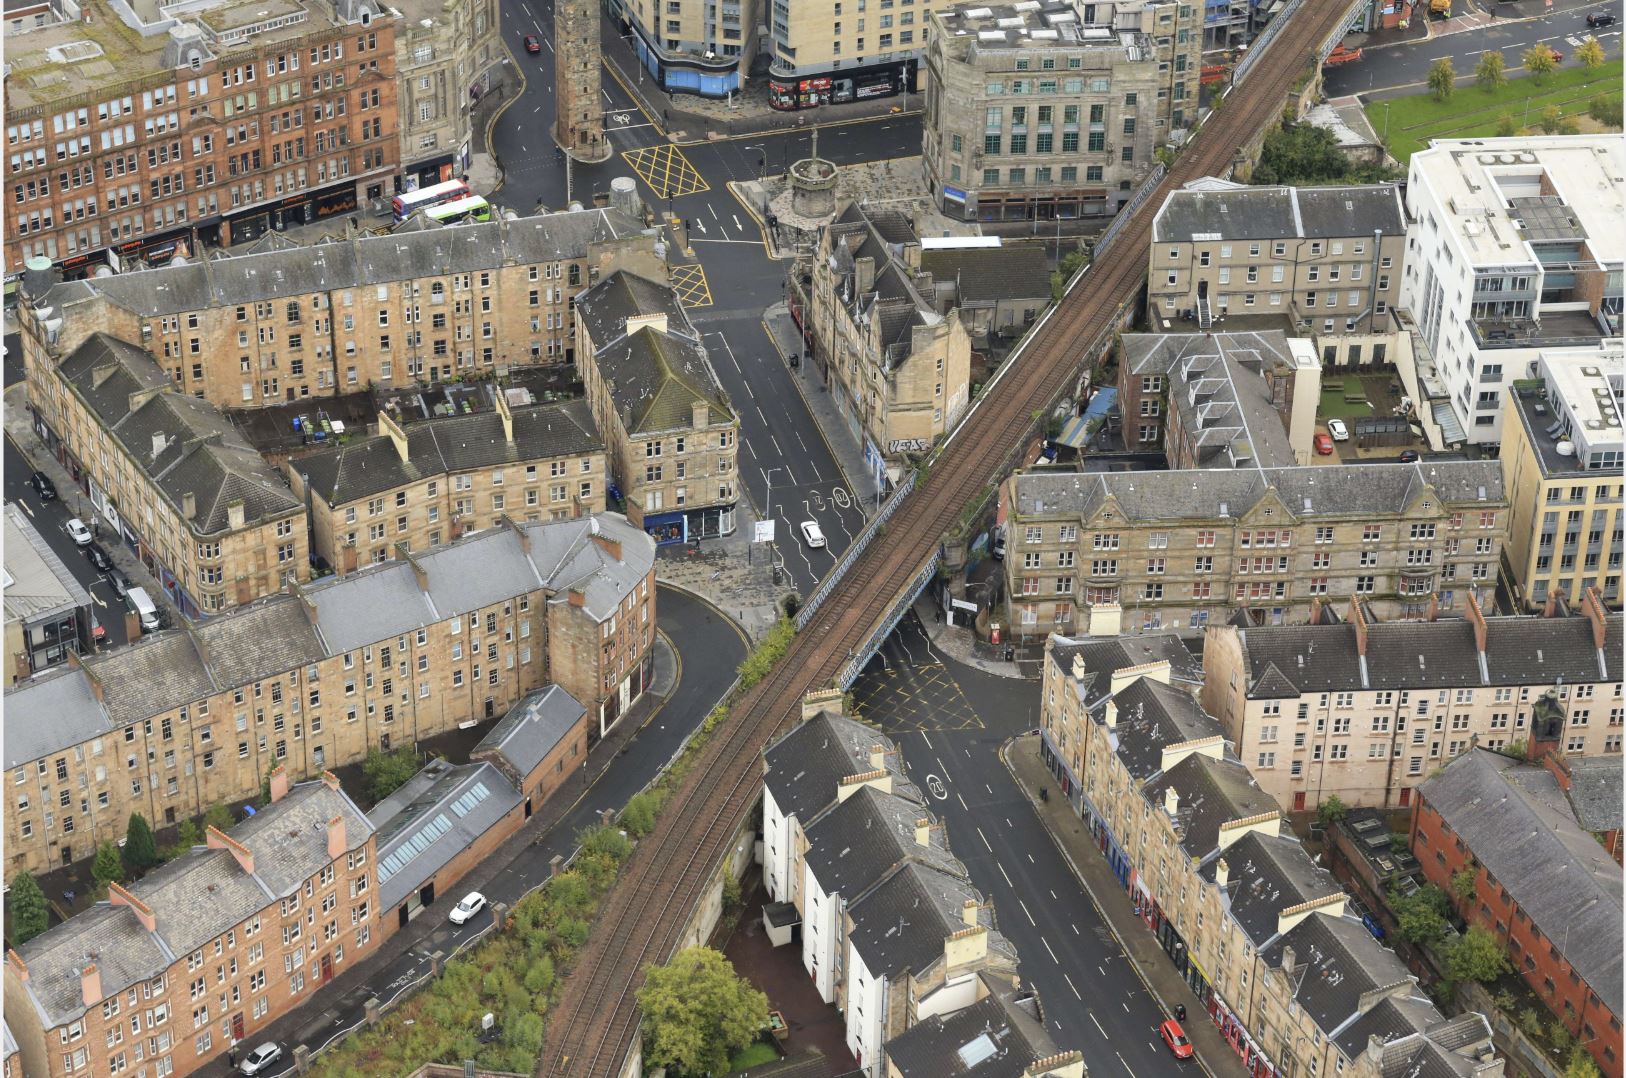 Improvement work set to begin on Glasgow city centre rail bridge